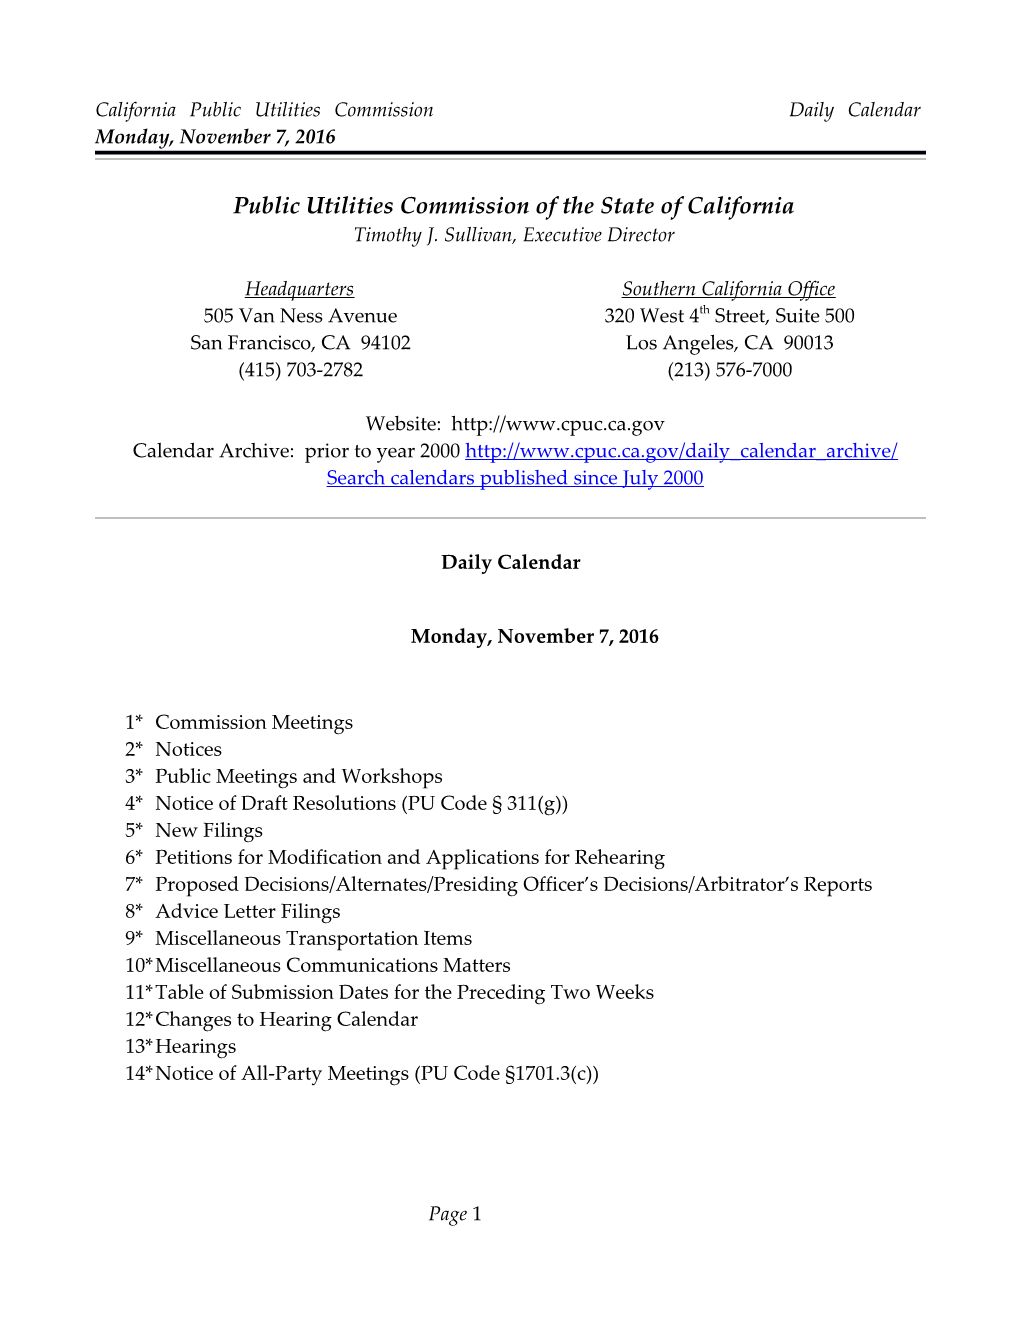 California Public Utilities Commission Daily Calendar Monday, November 7, 2016